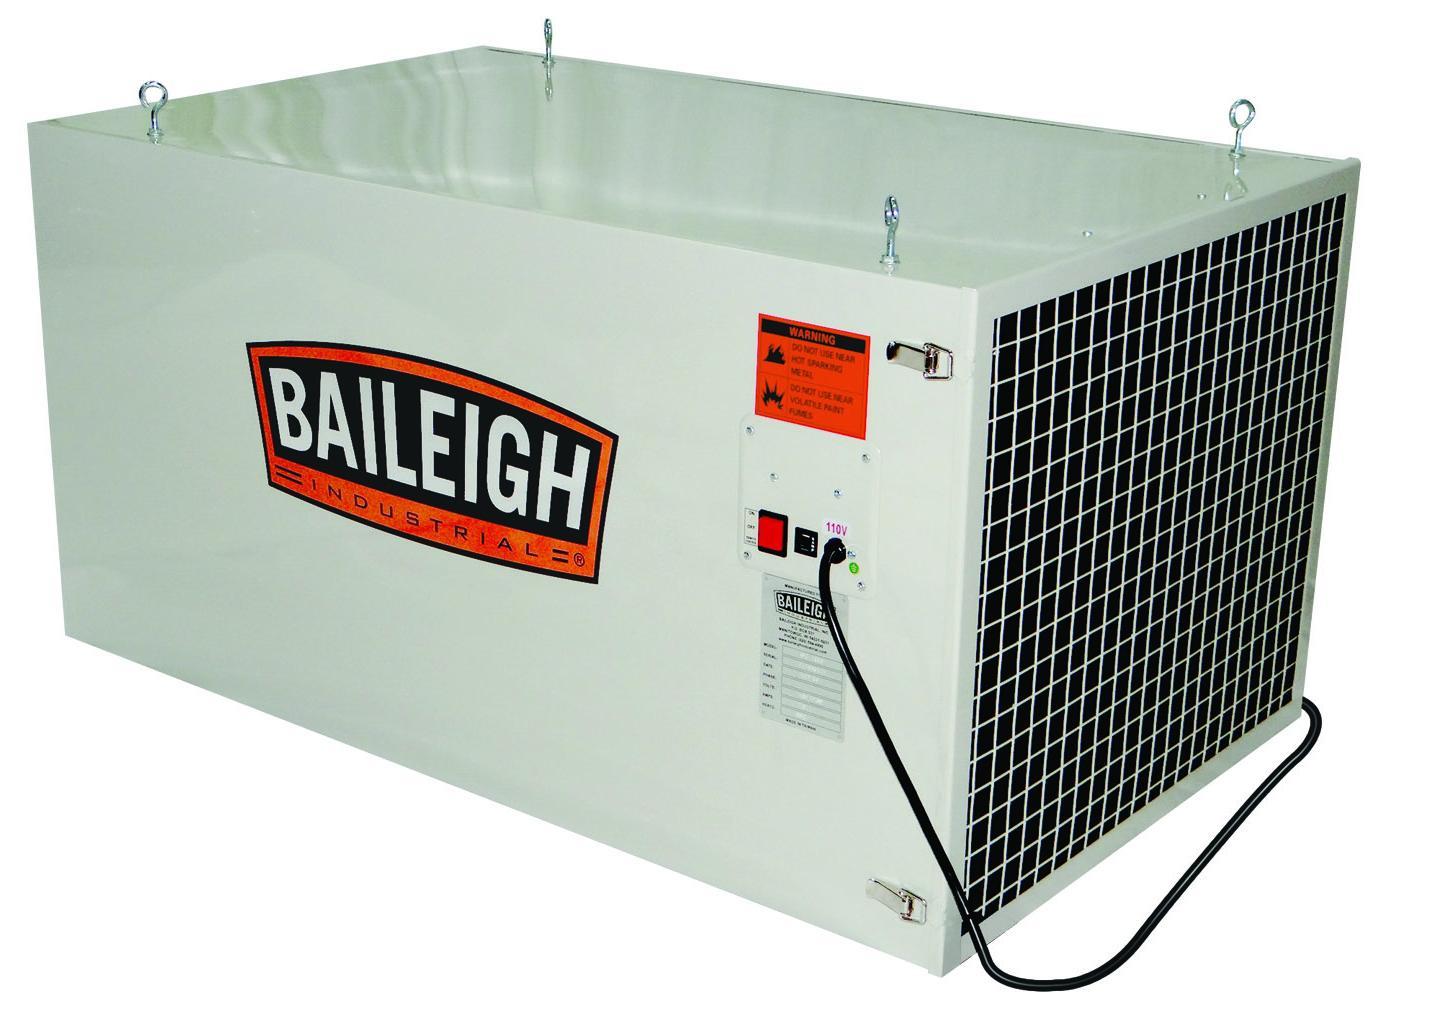 Baileigh Air Filtration System - AFS-1600